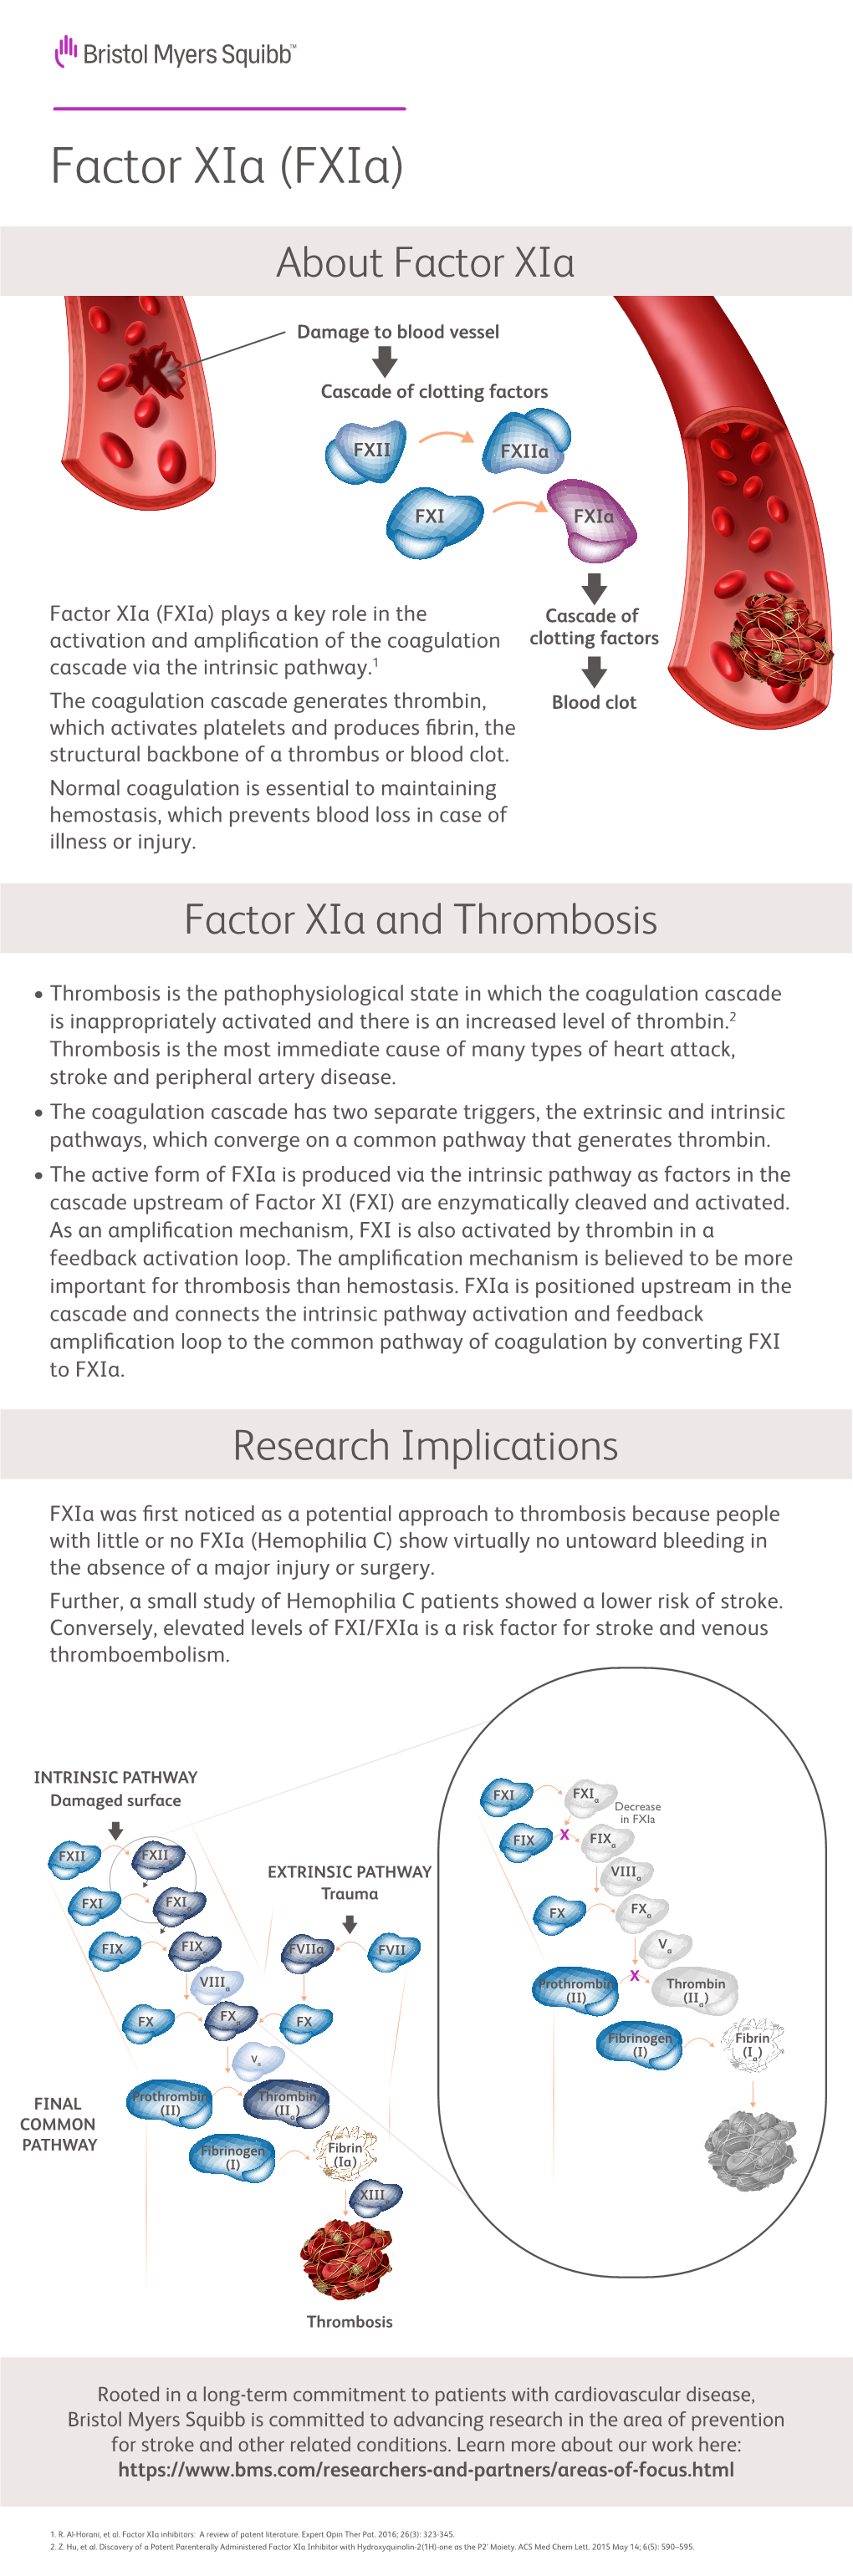 Factor Xia Factsheet